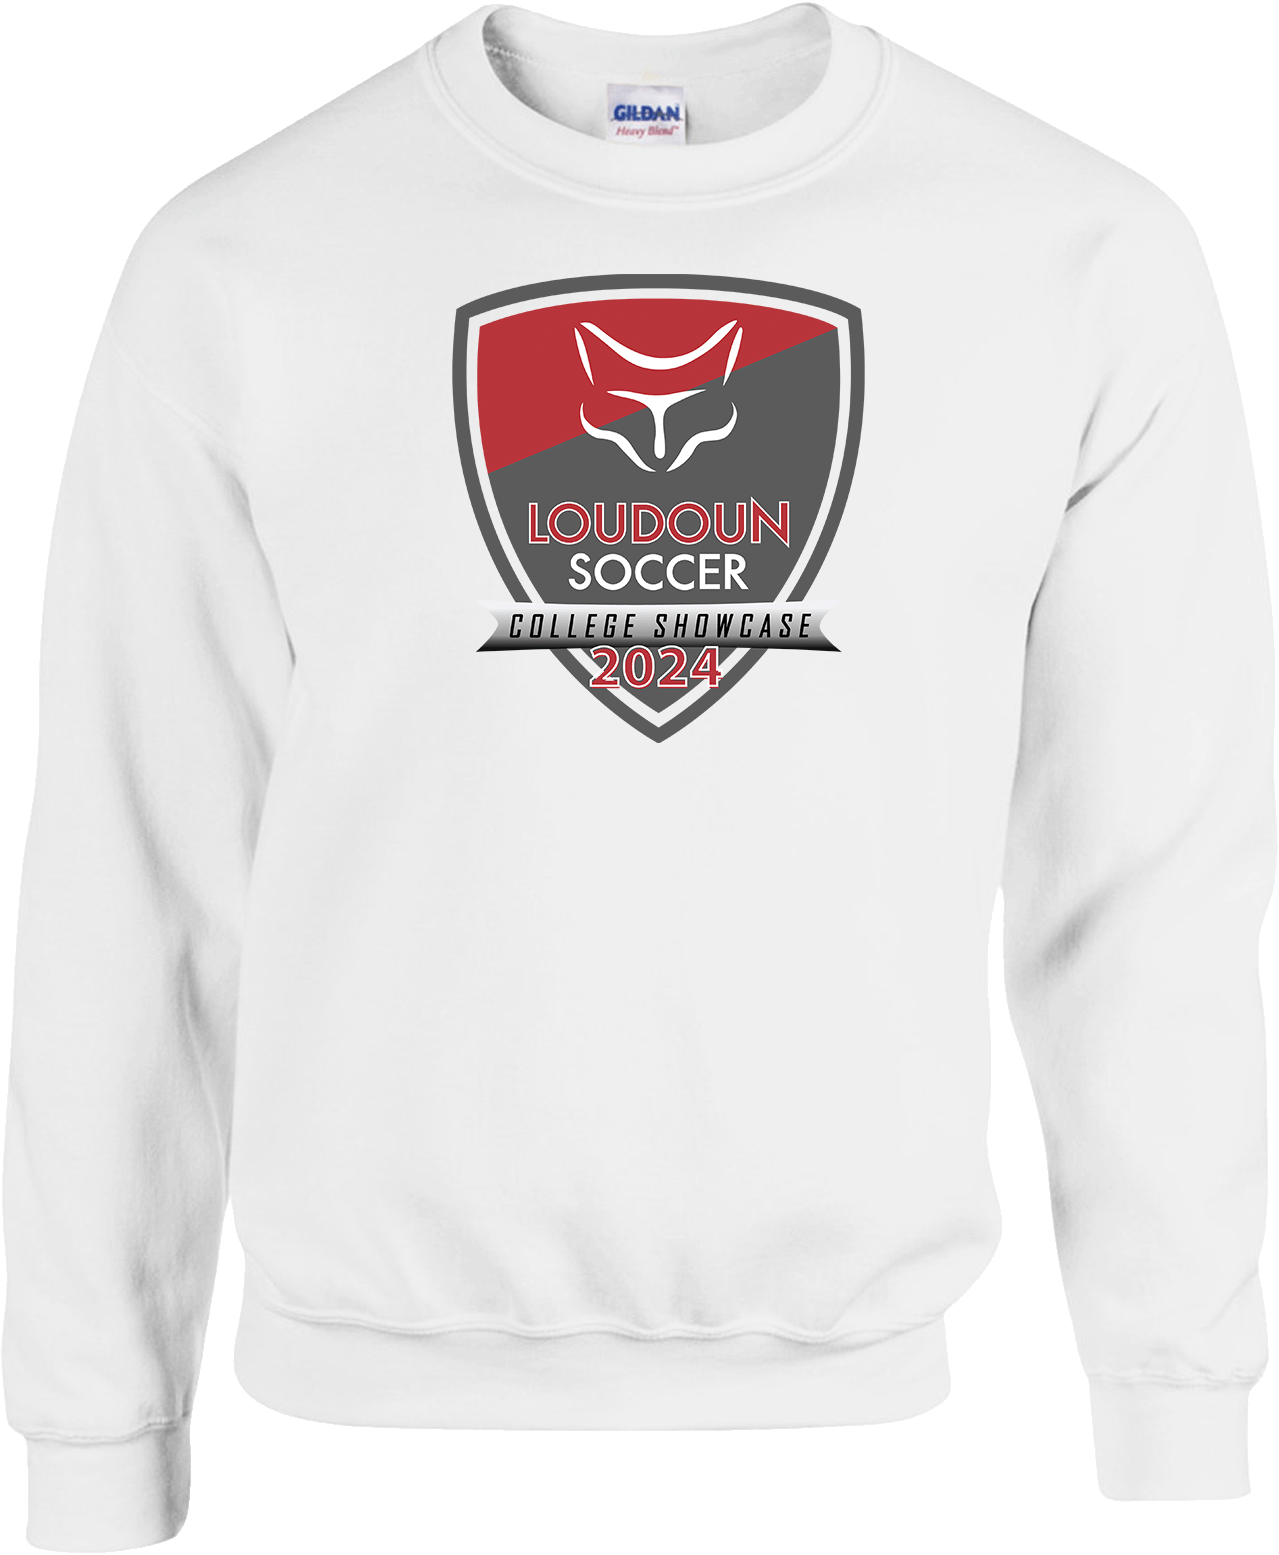 Crew Sweatershirt - 2024 Loudoun Soccer College Showcase